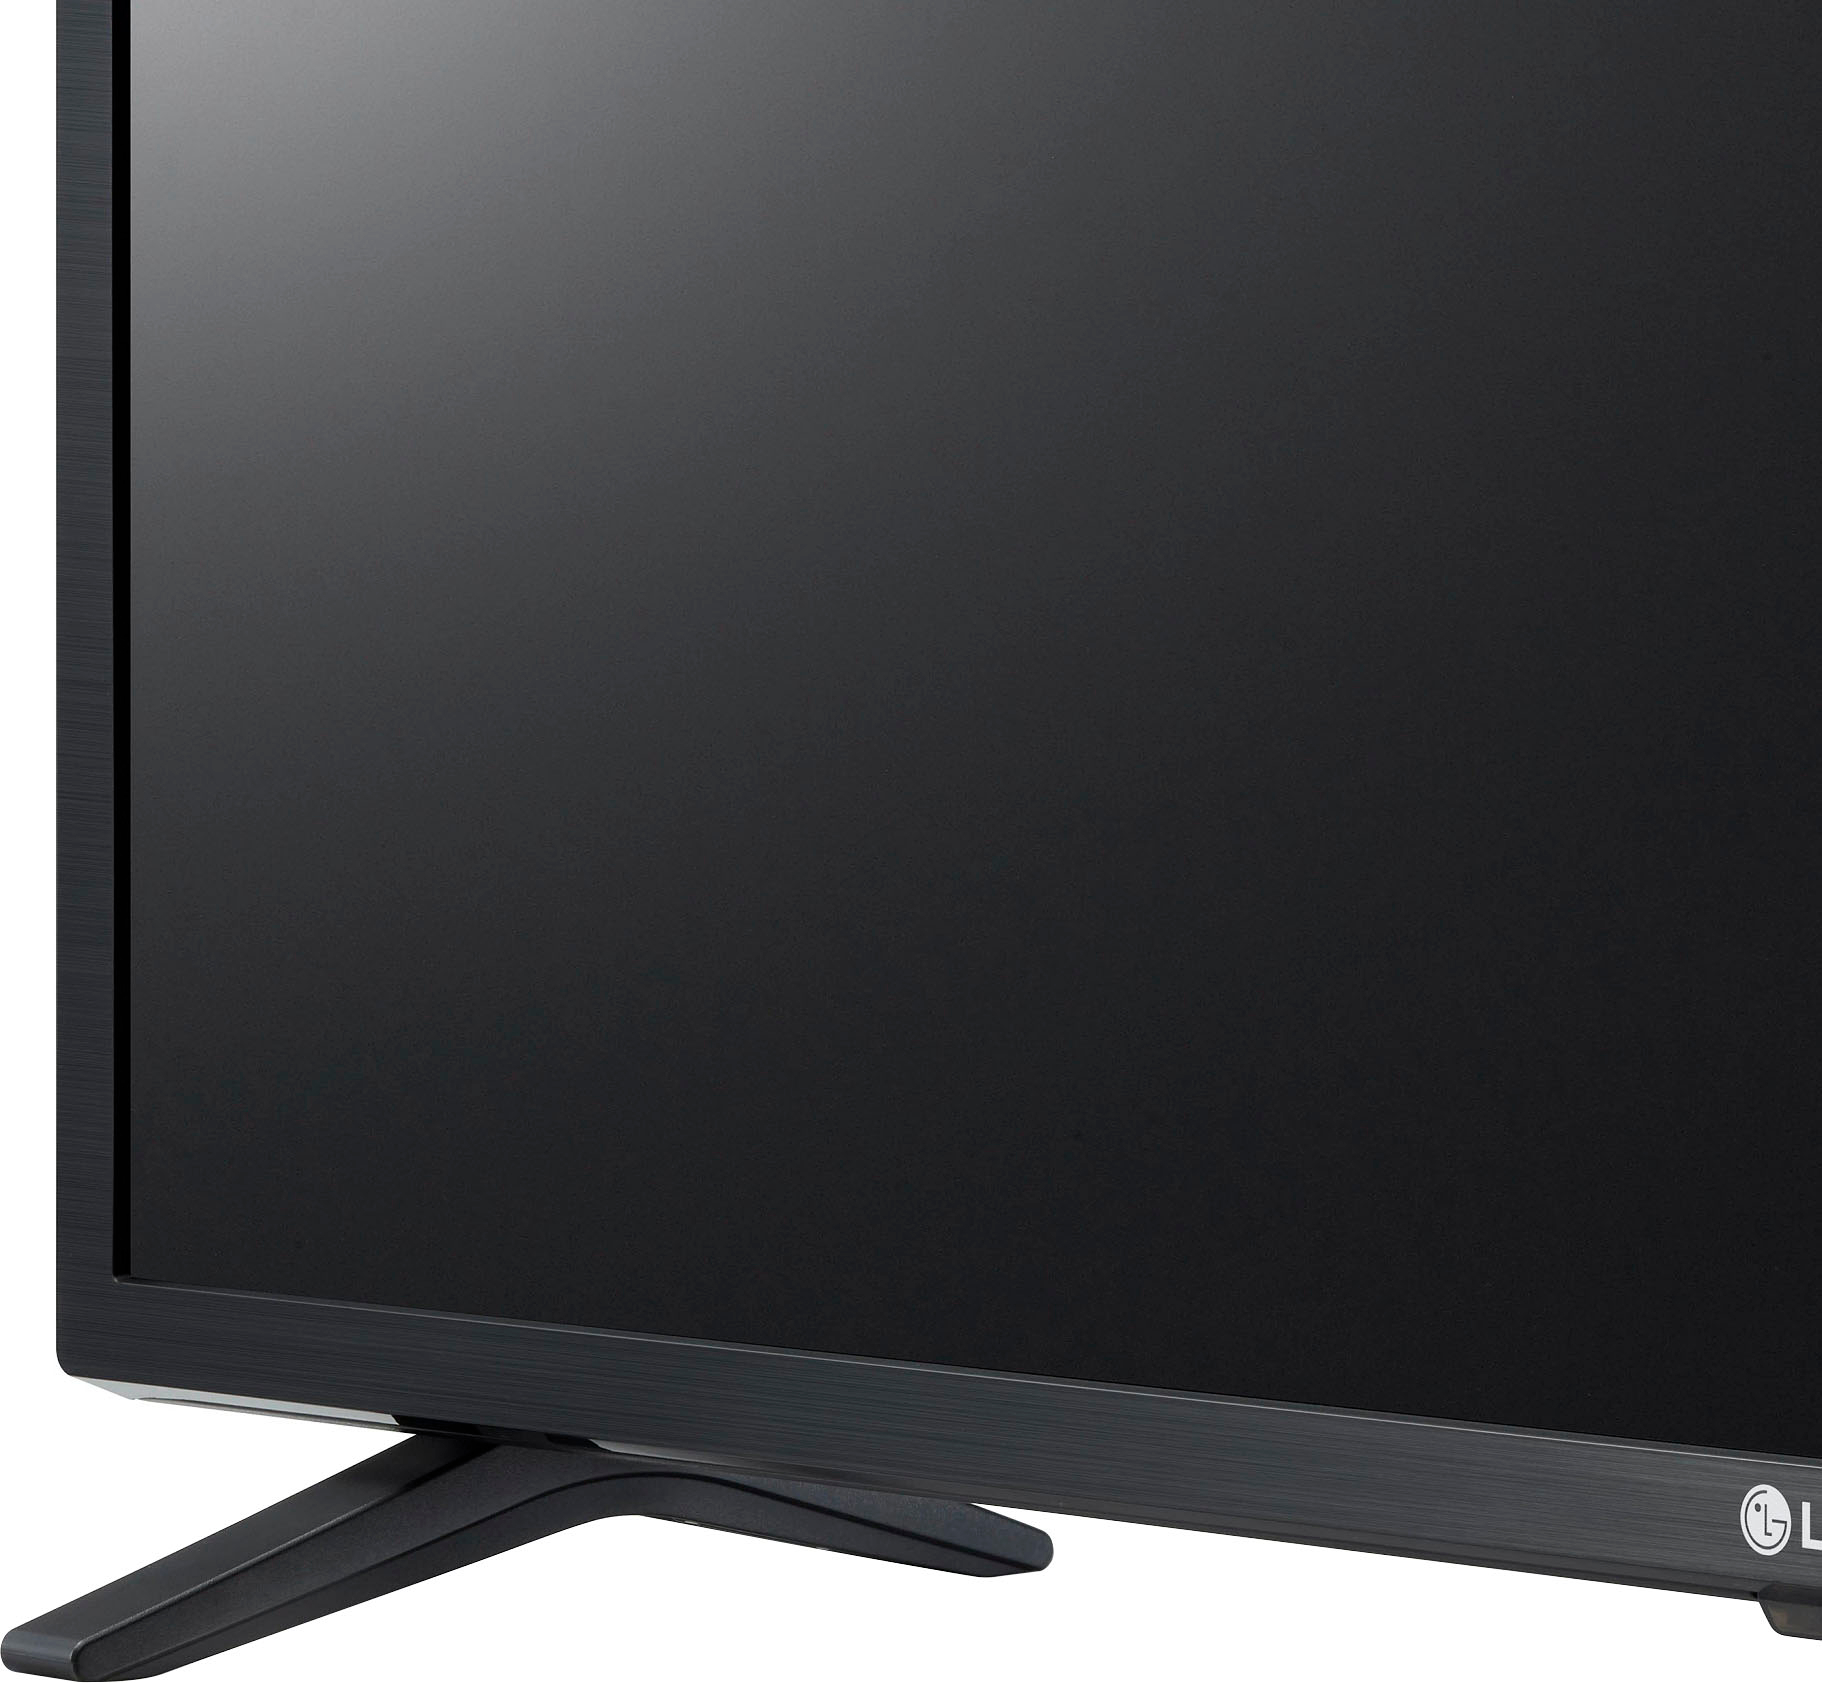 2022 LG 32 Inch Smart TV, LG 32LQ570 WebOS Smart TV